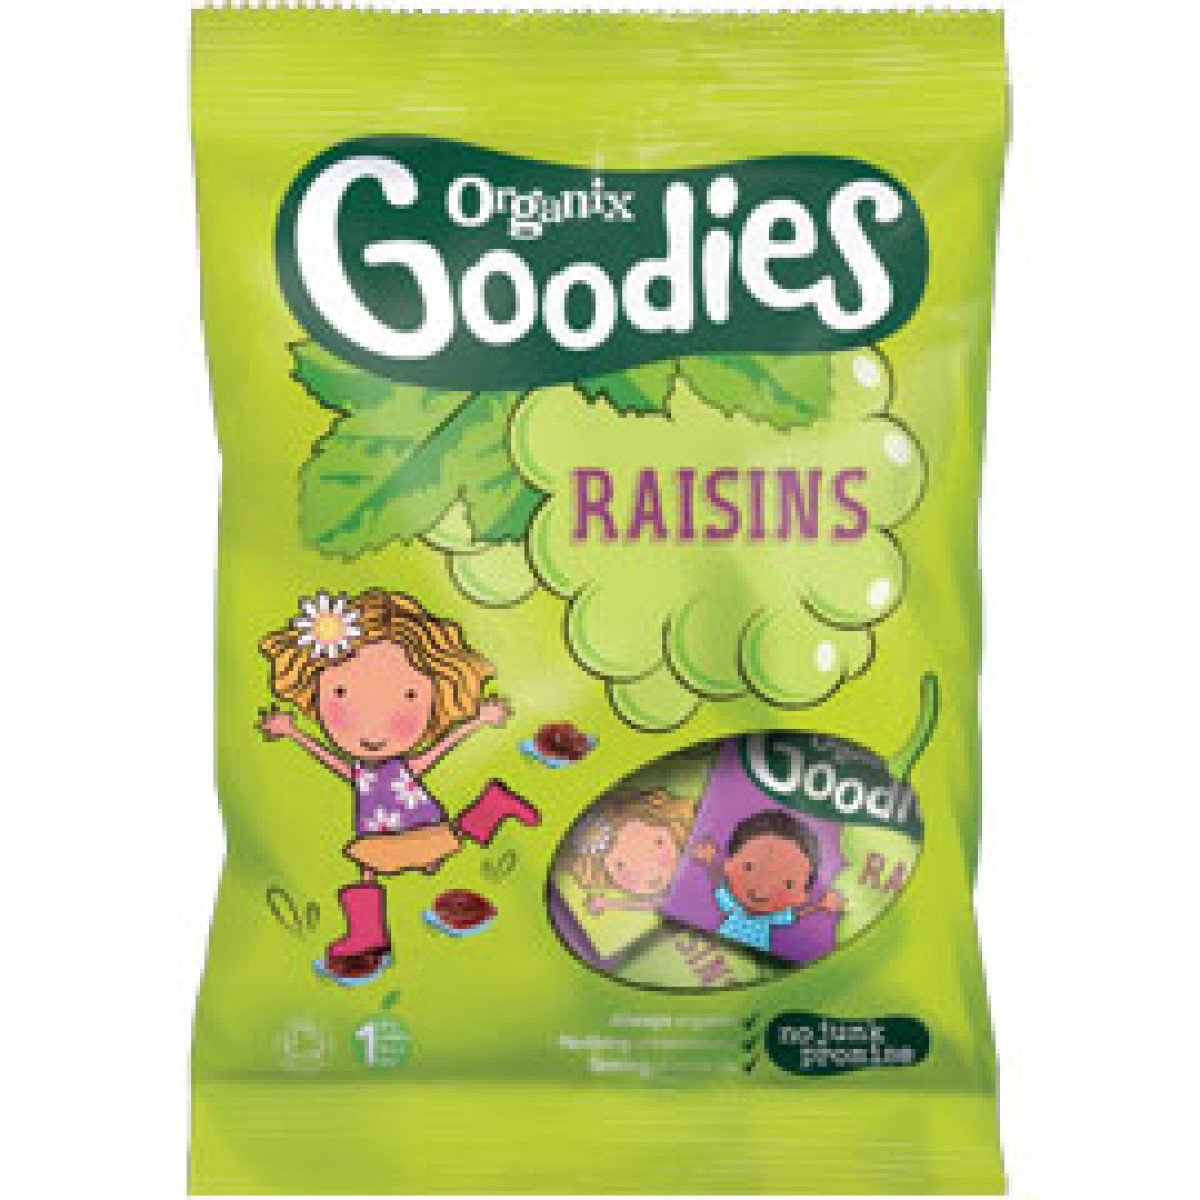 Product picture for Raisins - 12 mini size boxes